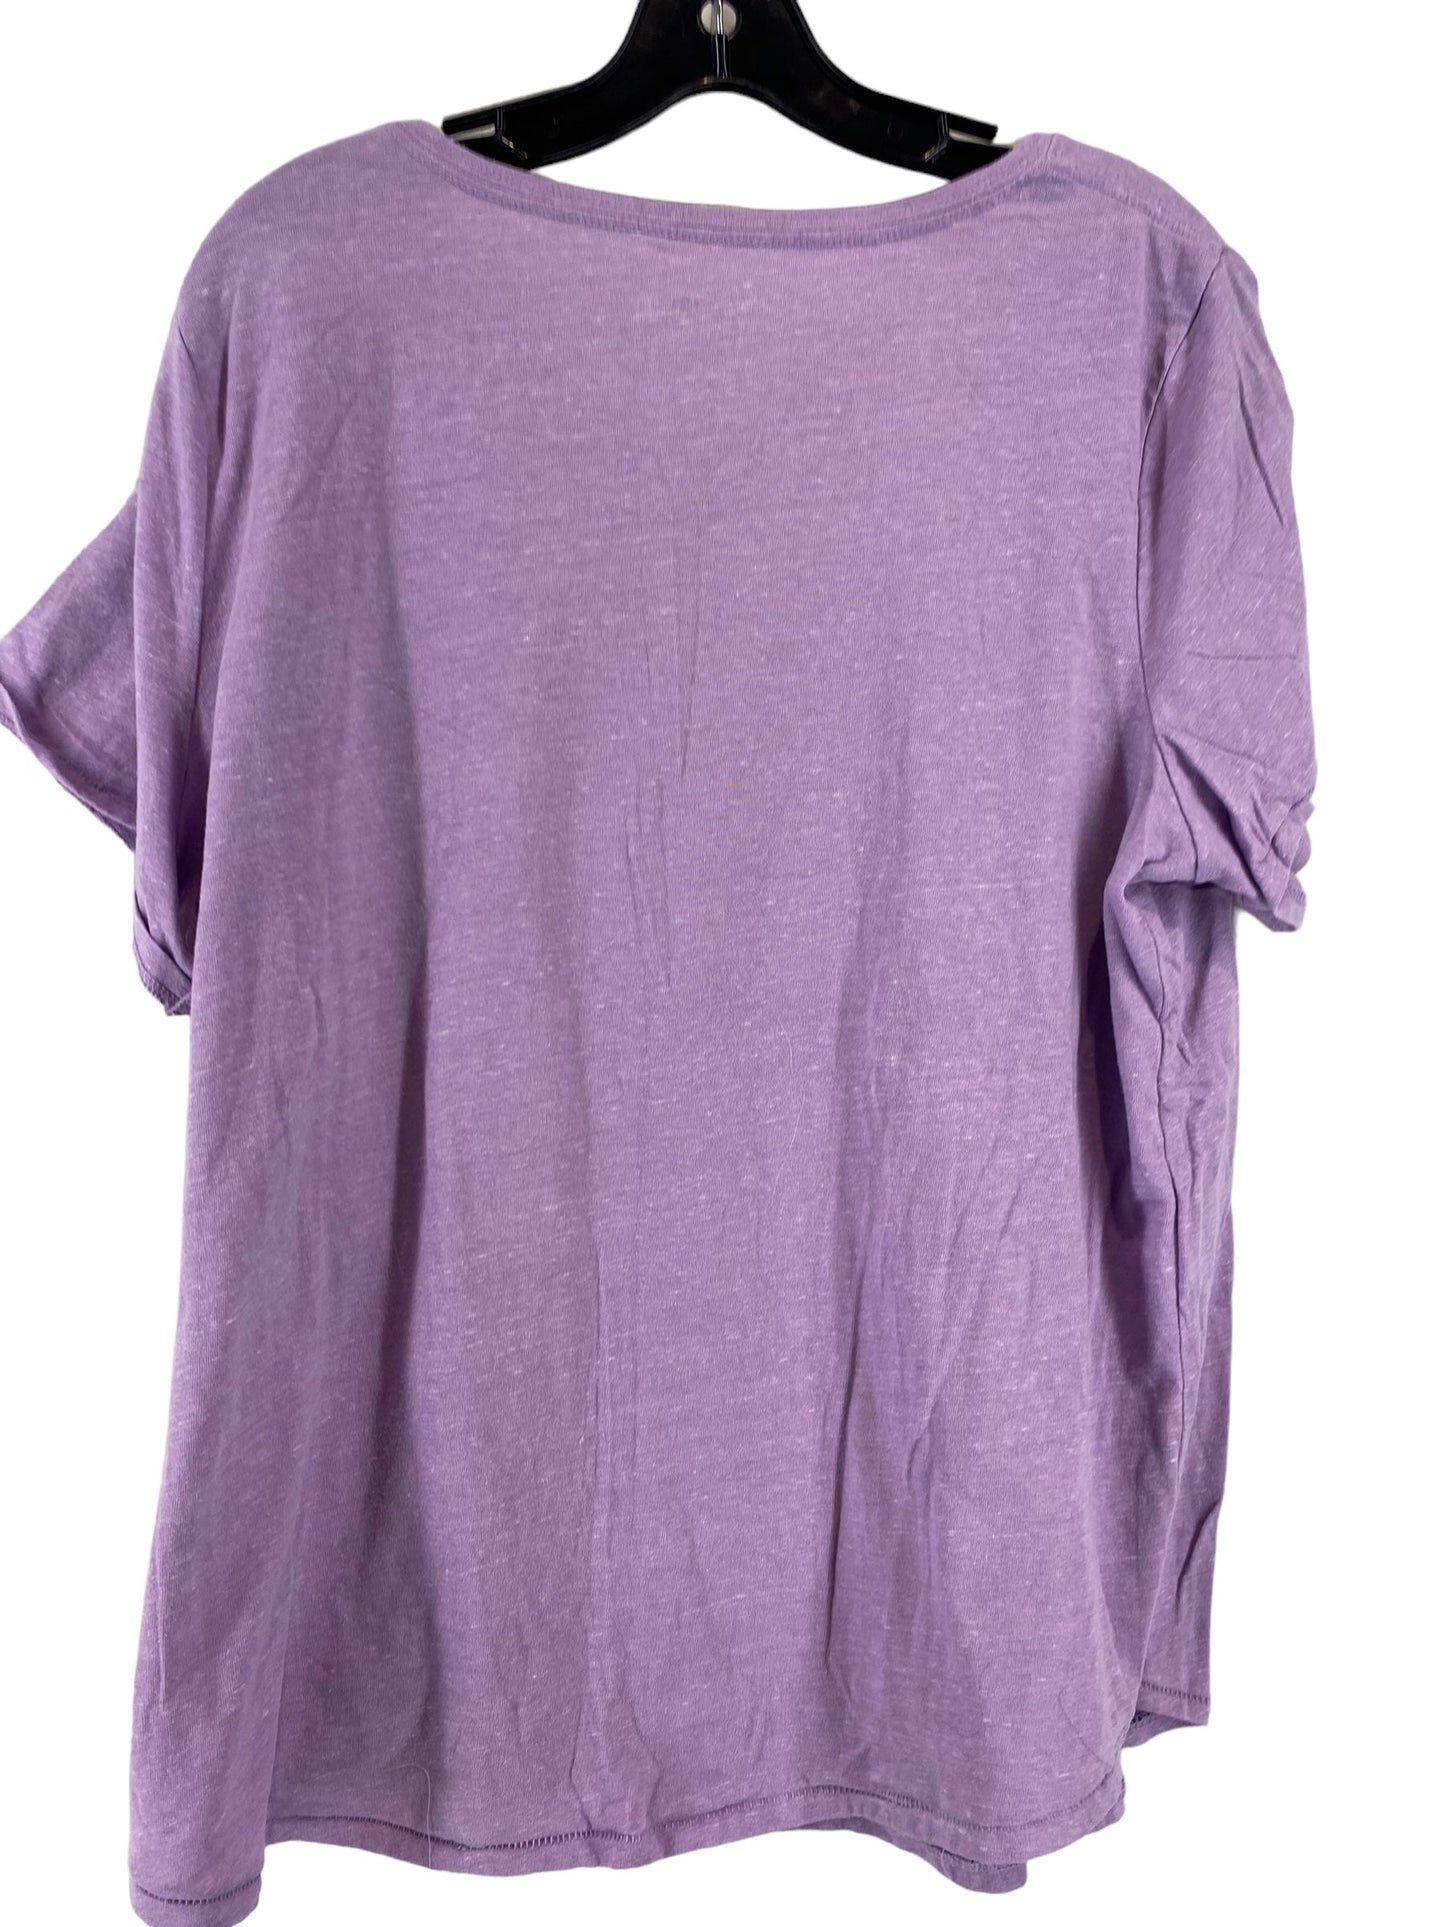 Purple Top Short Sleeve Evri, Size 1x